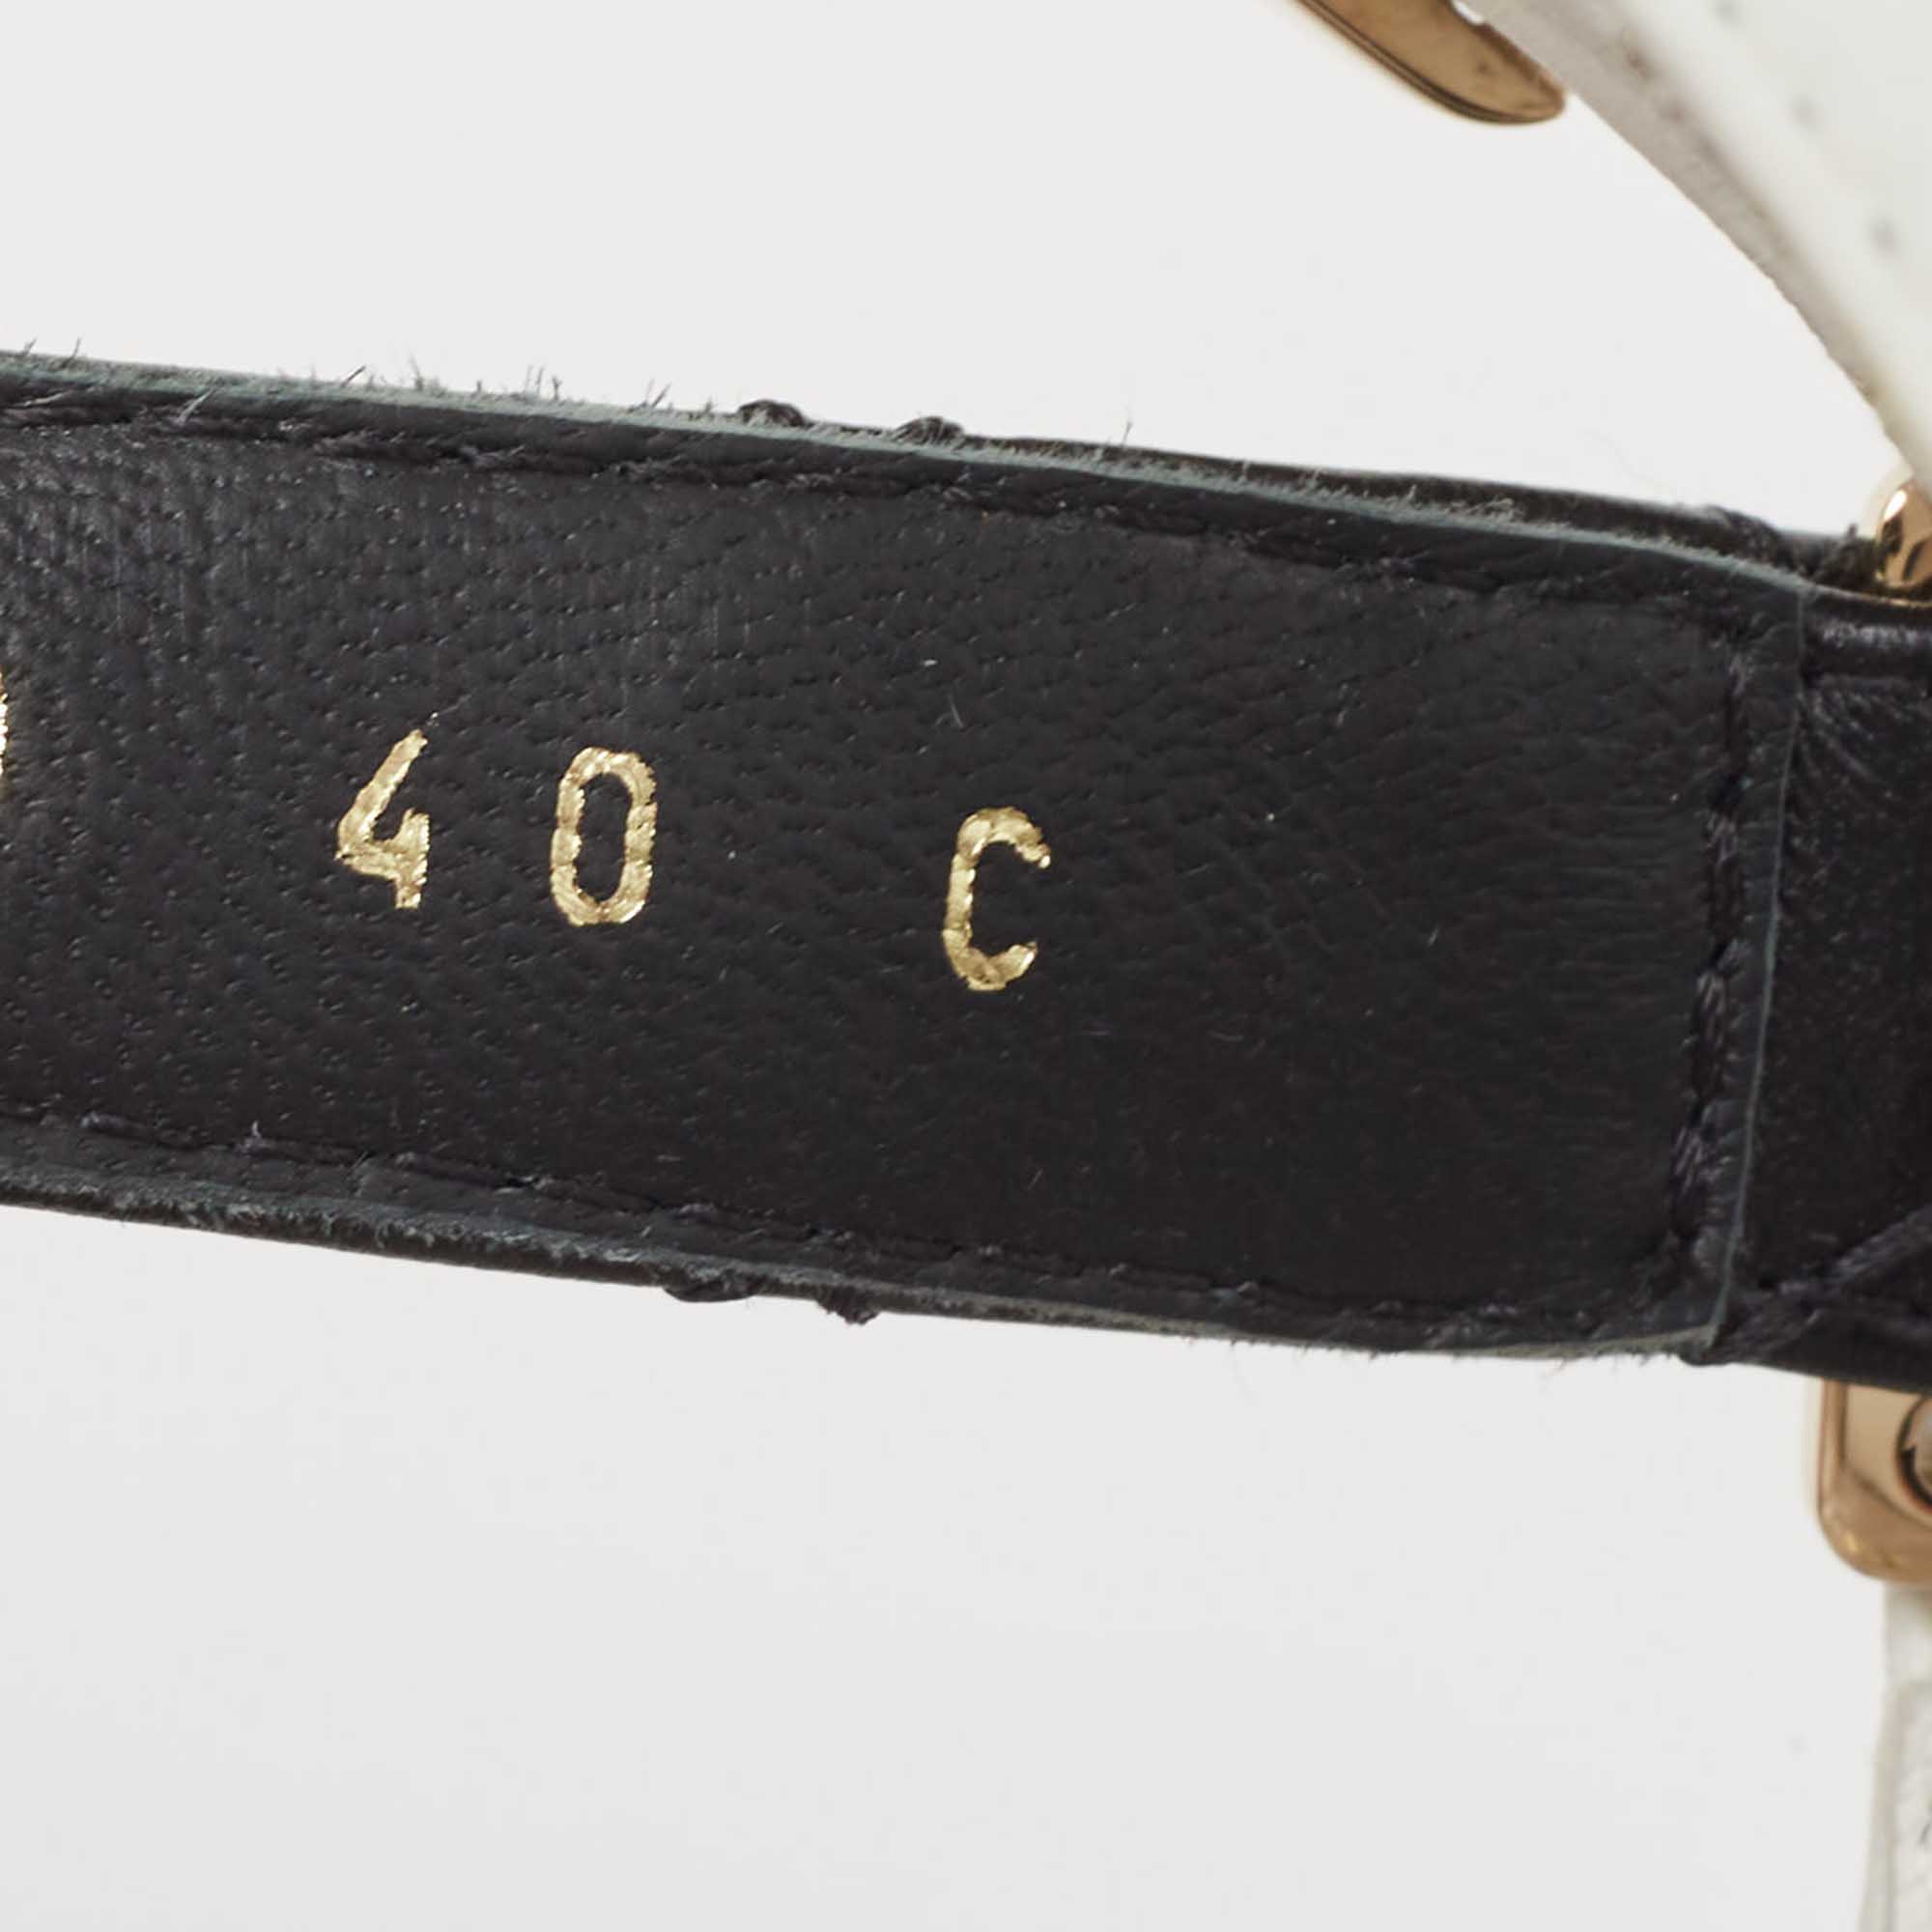 Chanel Multicolor Leather Interlocking CC Logo Sandals Size 40